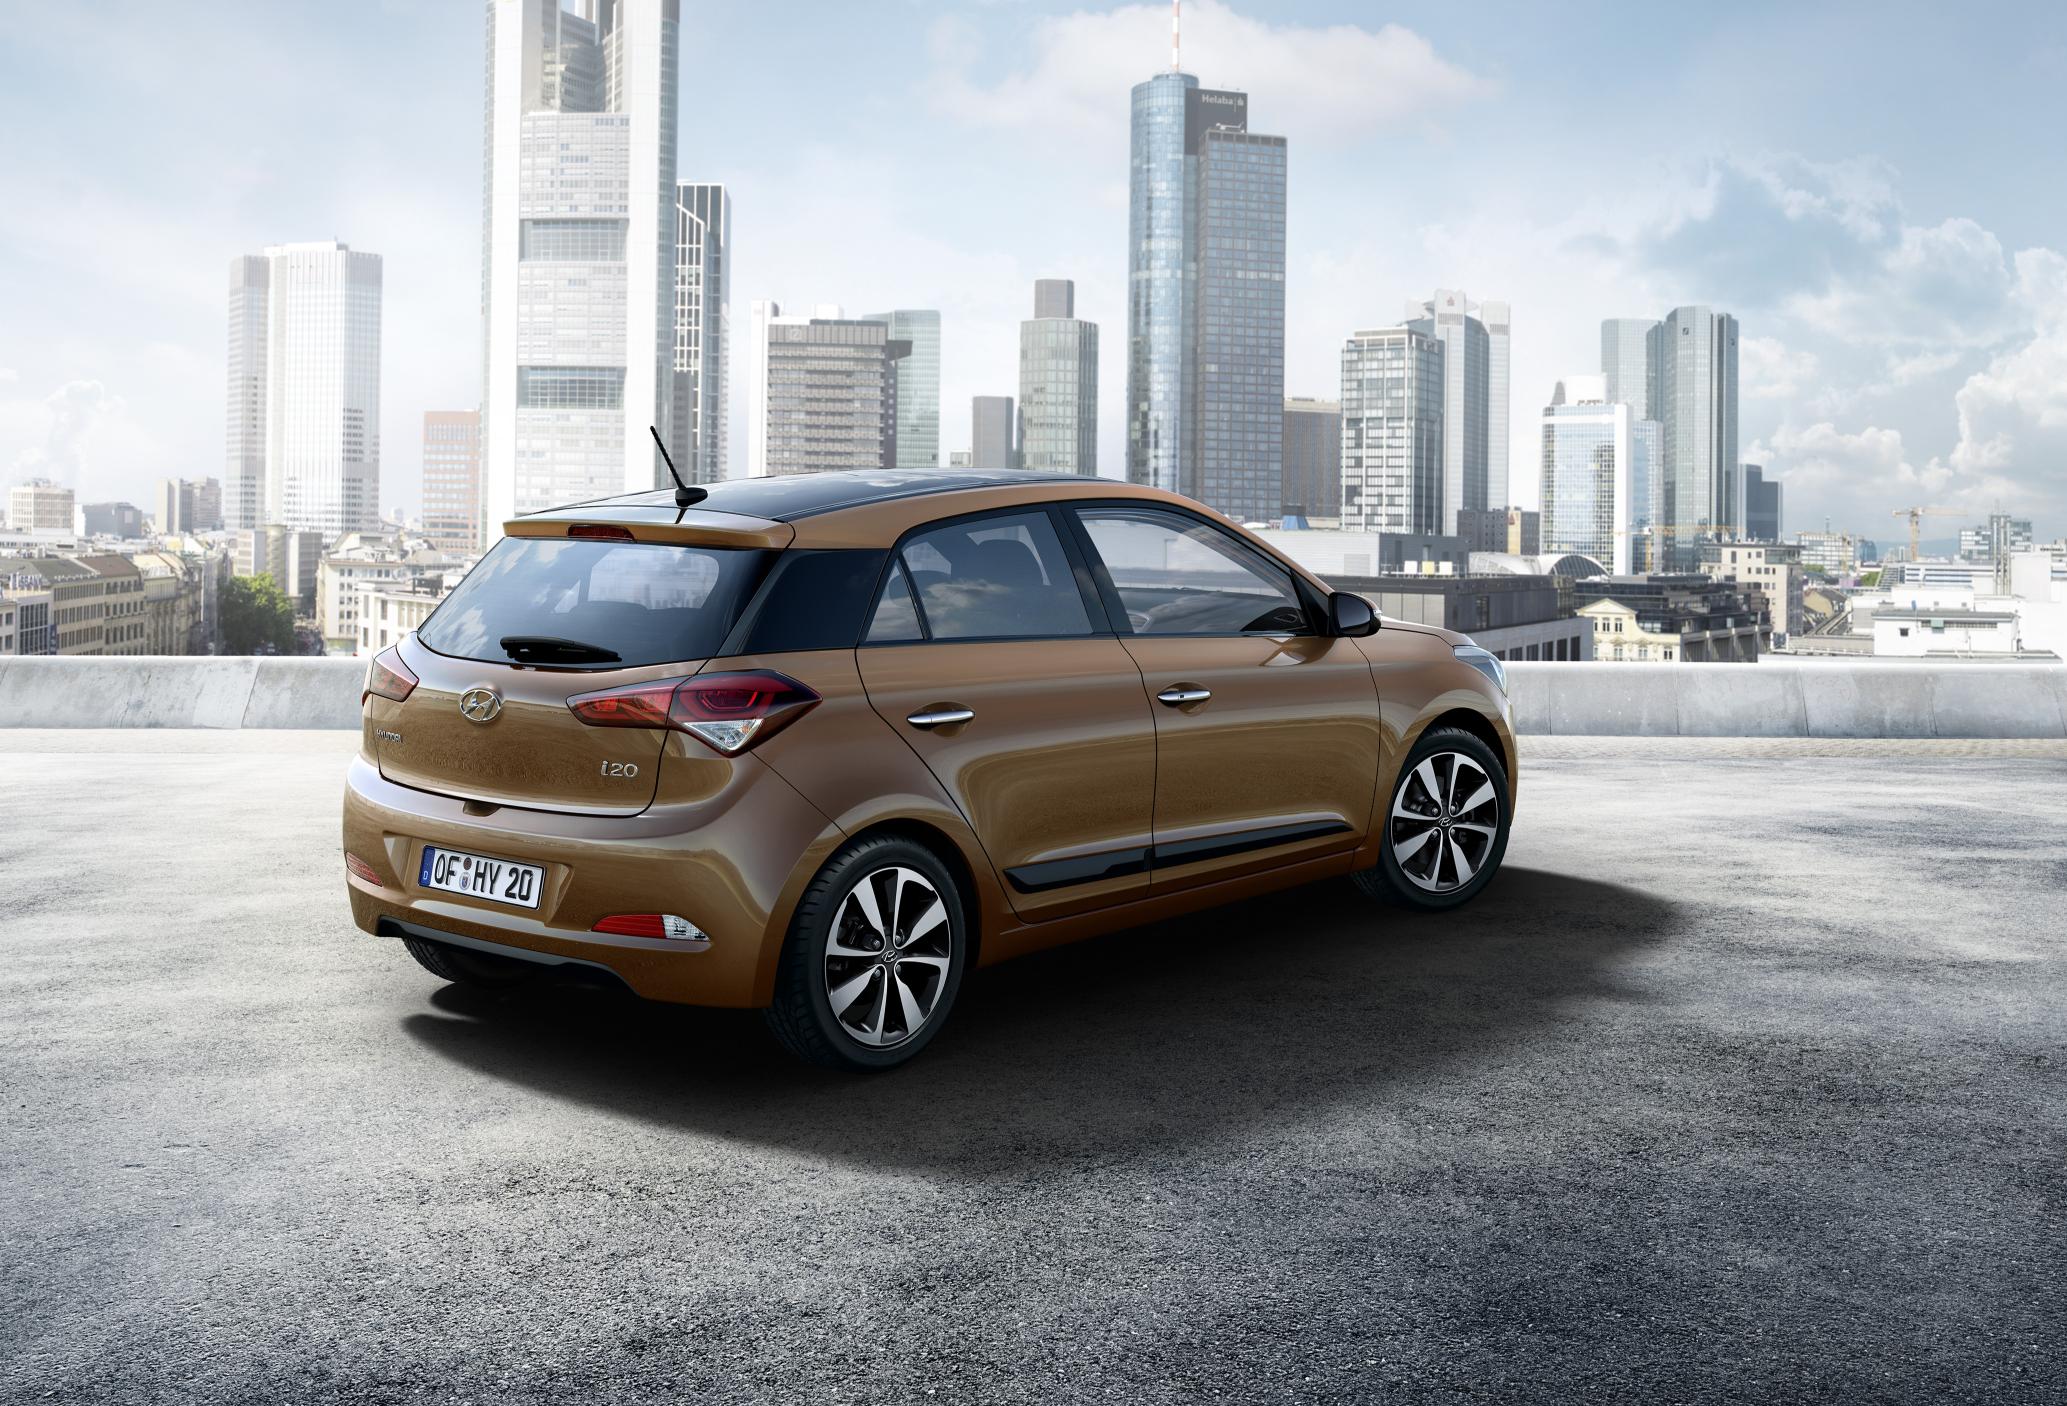 2015 Hyundai i20 Unveiled Ahead of Paris Motor Show [Video